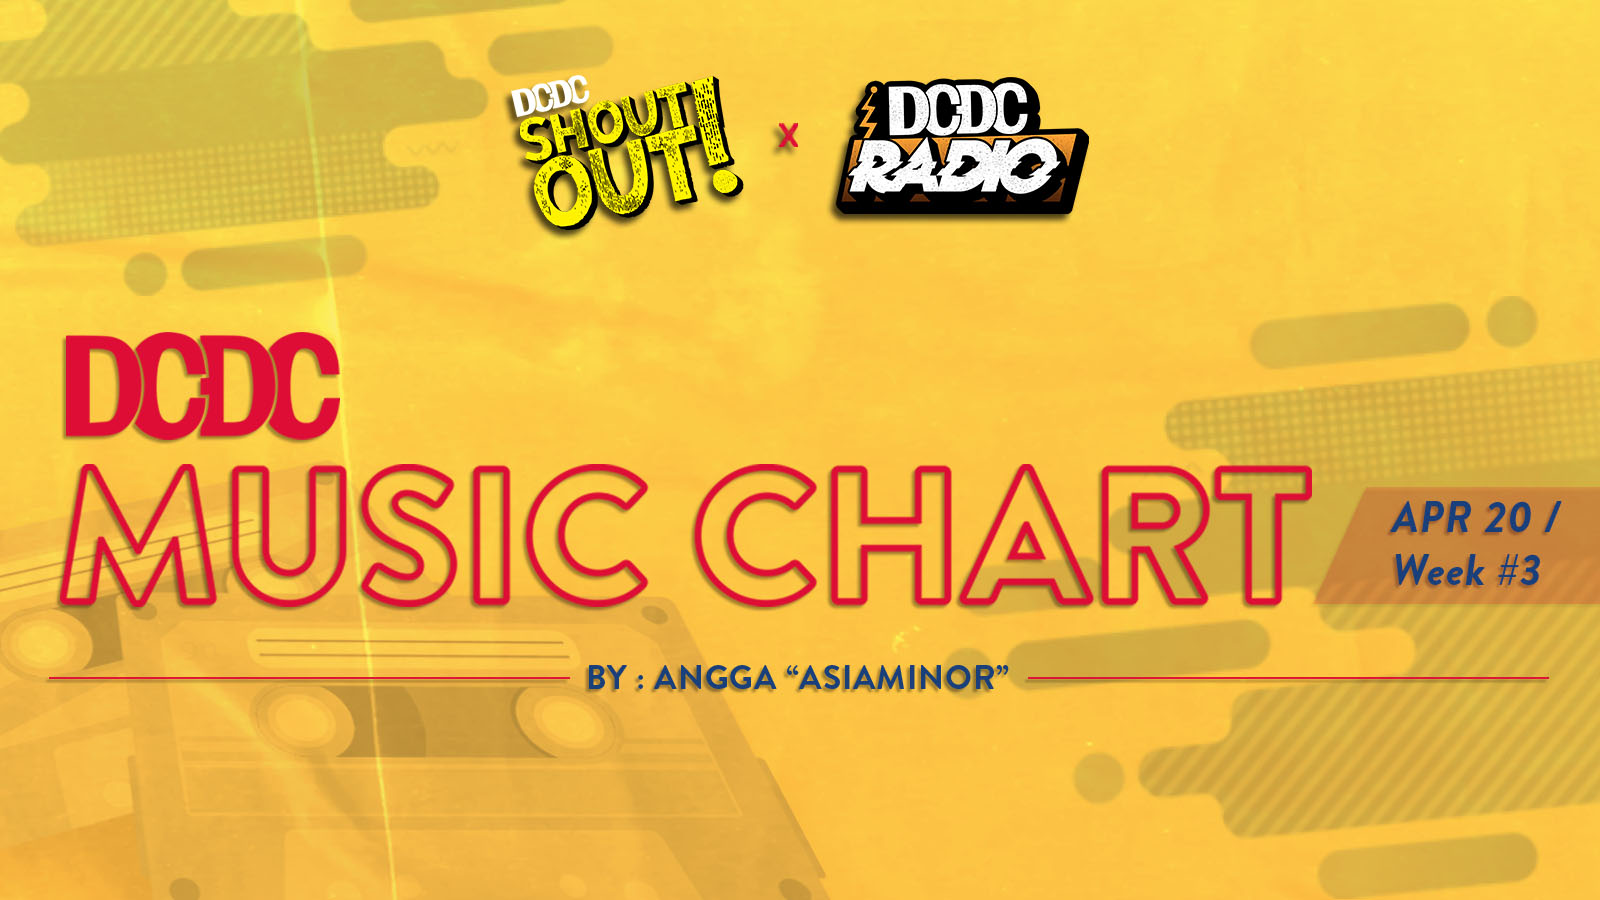 DCDC Music Chart - #3rd Week of April 2020